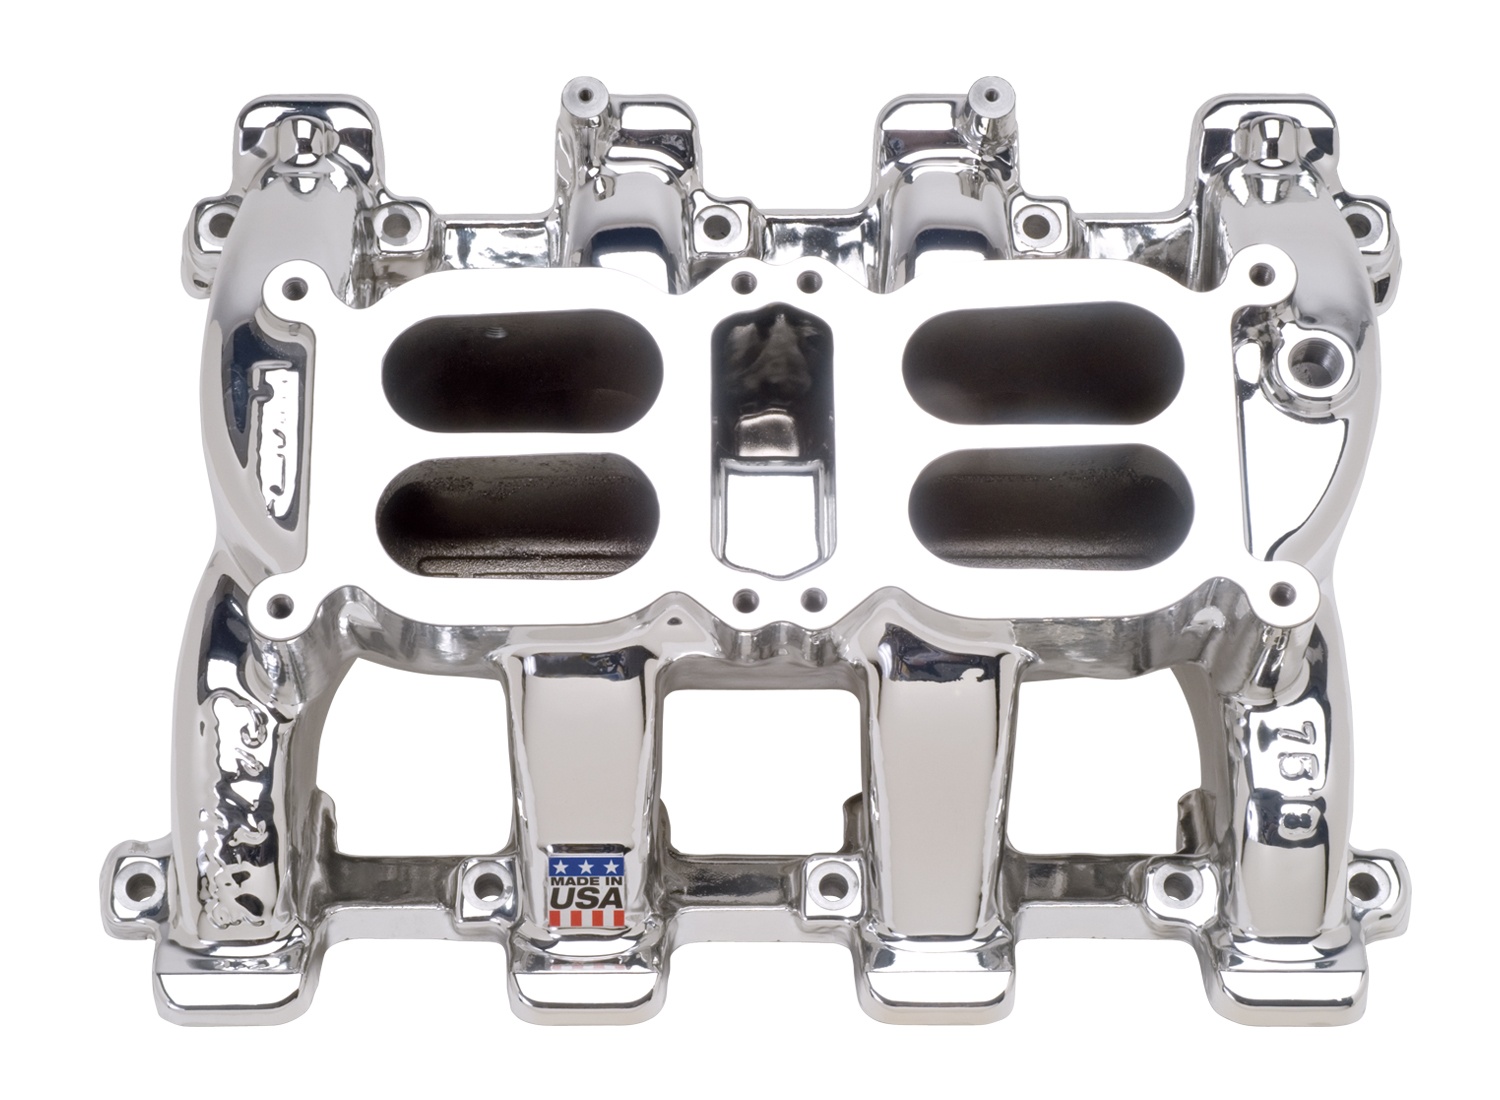 Edelbrock RPM Air-Gap Dual-Quad LS1 manifold with EnduraShine finish for GM Gen III, Part# 75184